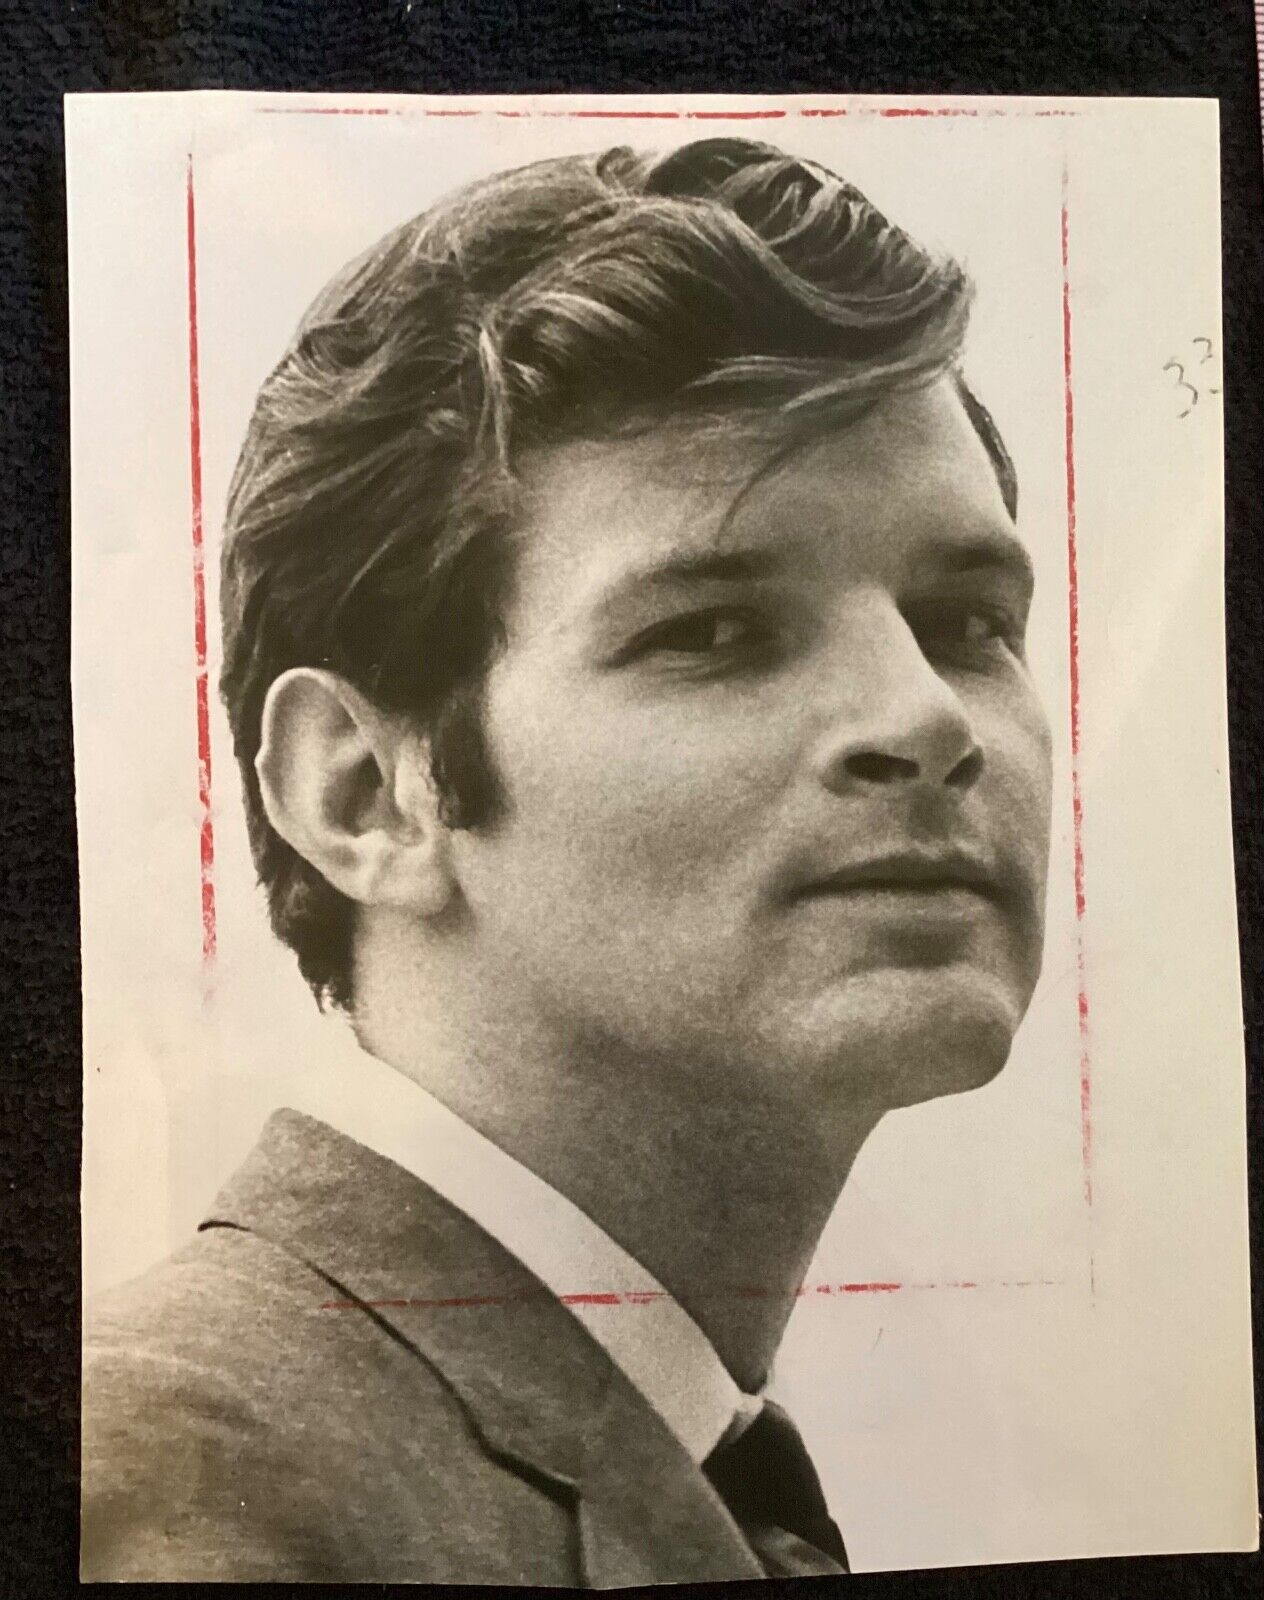 Press Photo - actor Charles Murphy 1960s